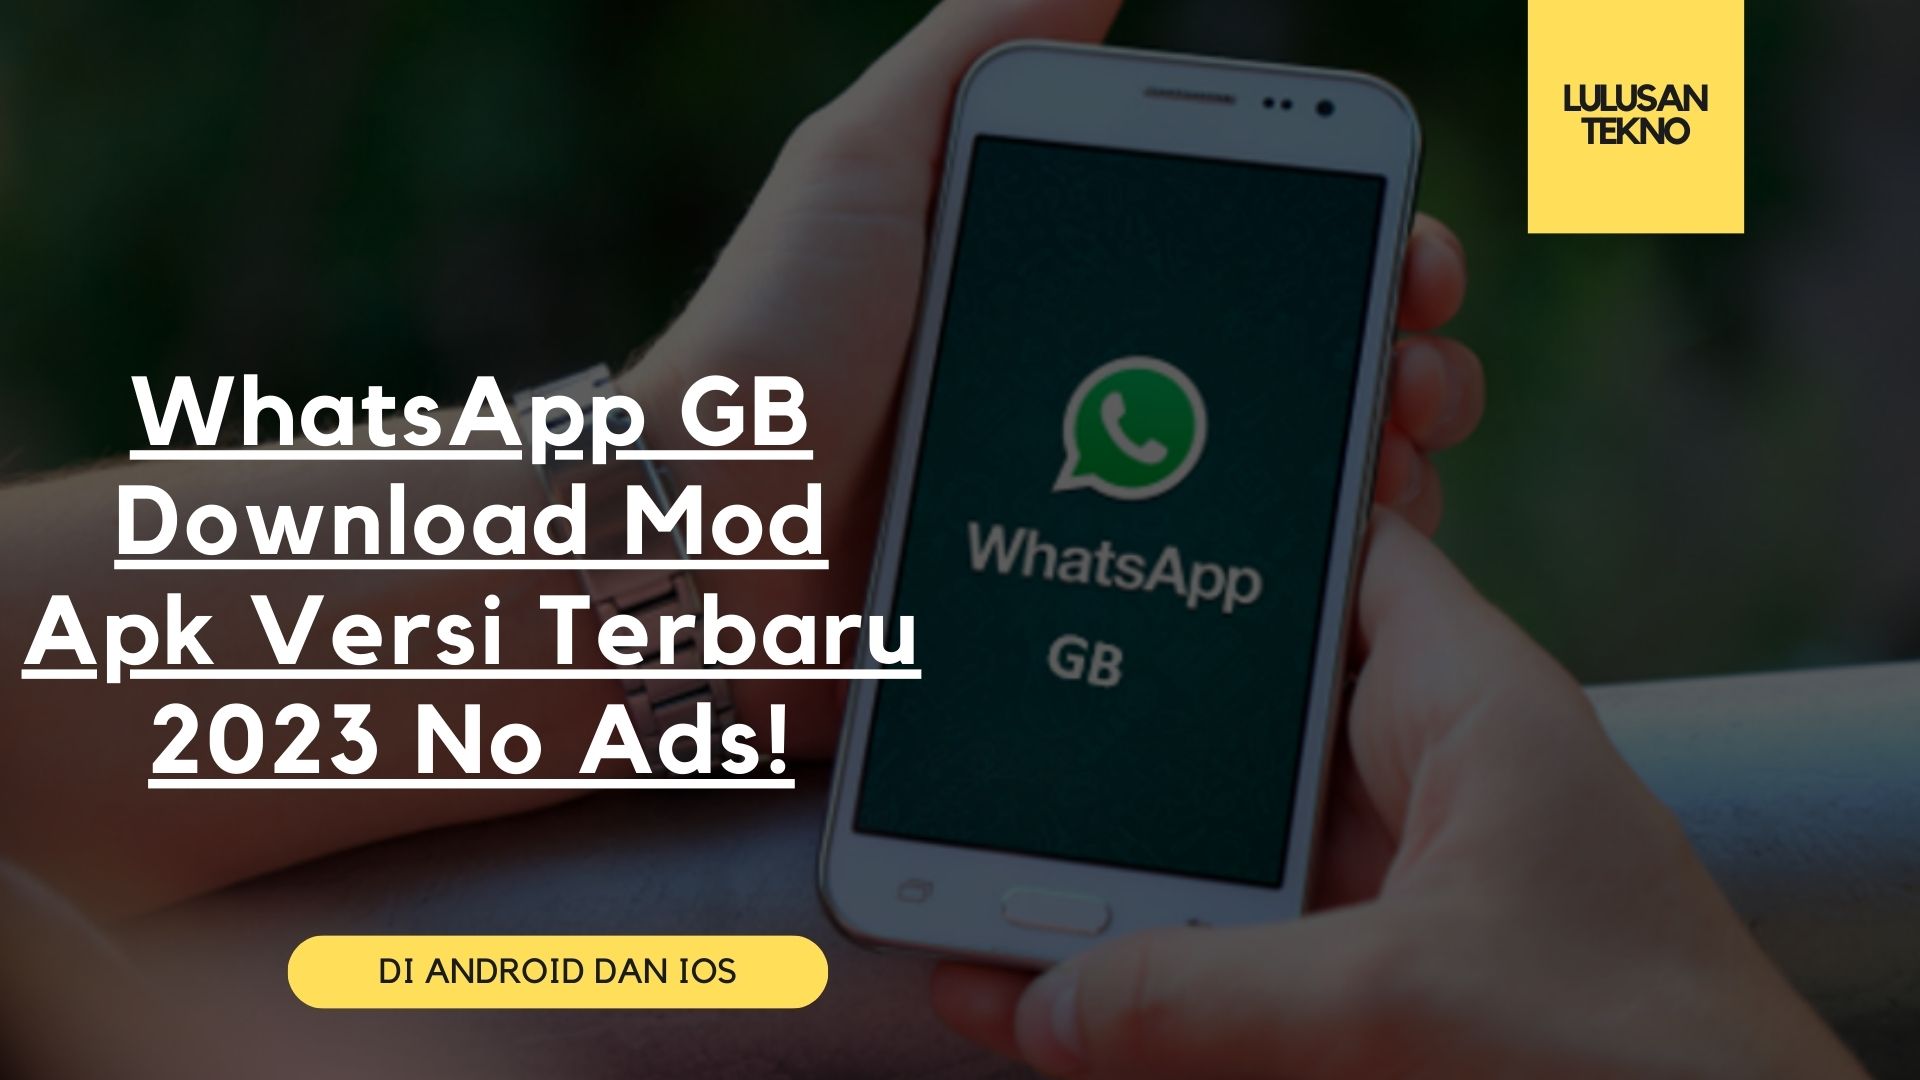 WhatsApp GB Download Mod Apk Versi Terbaru 2023 No Ads!